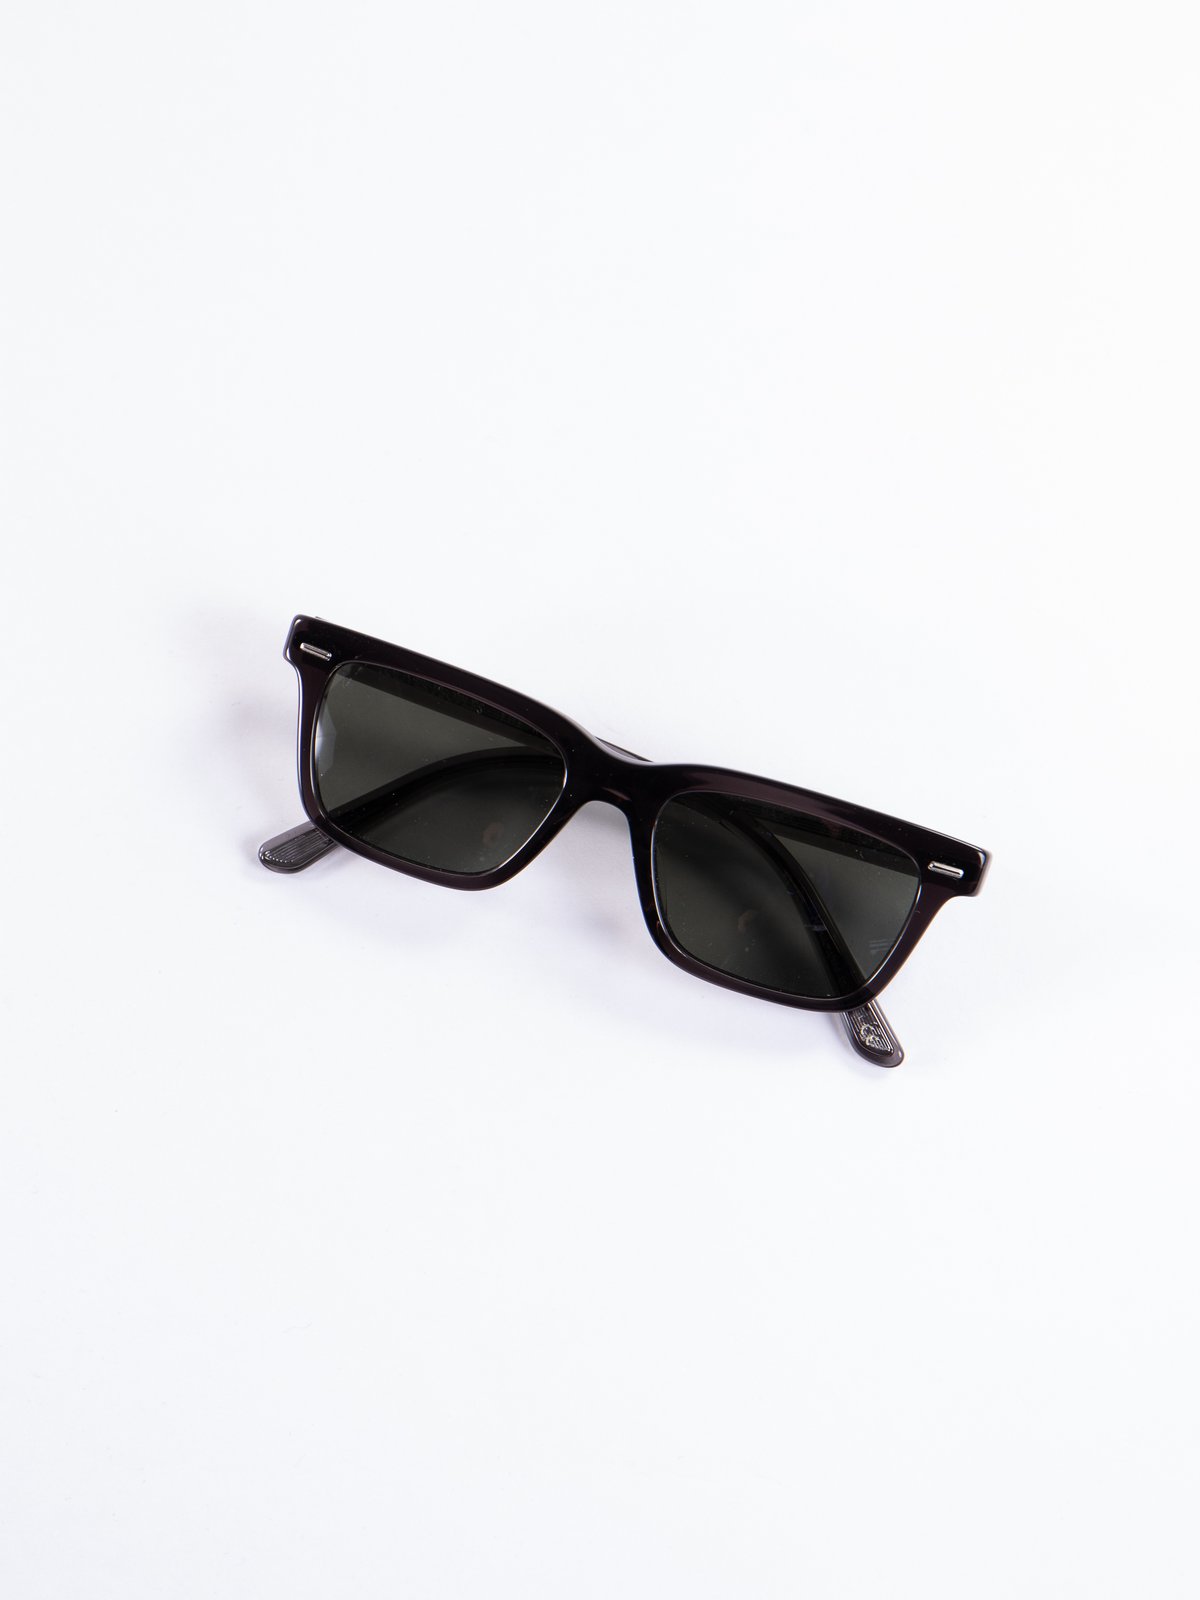 Vivid Dark Grey BA CC Sunglasses - Image 1